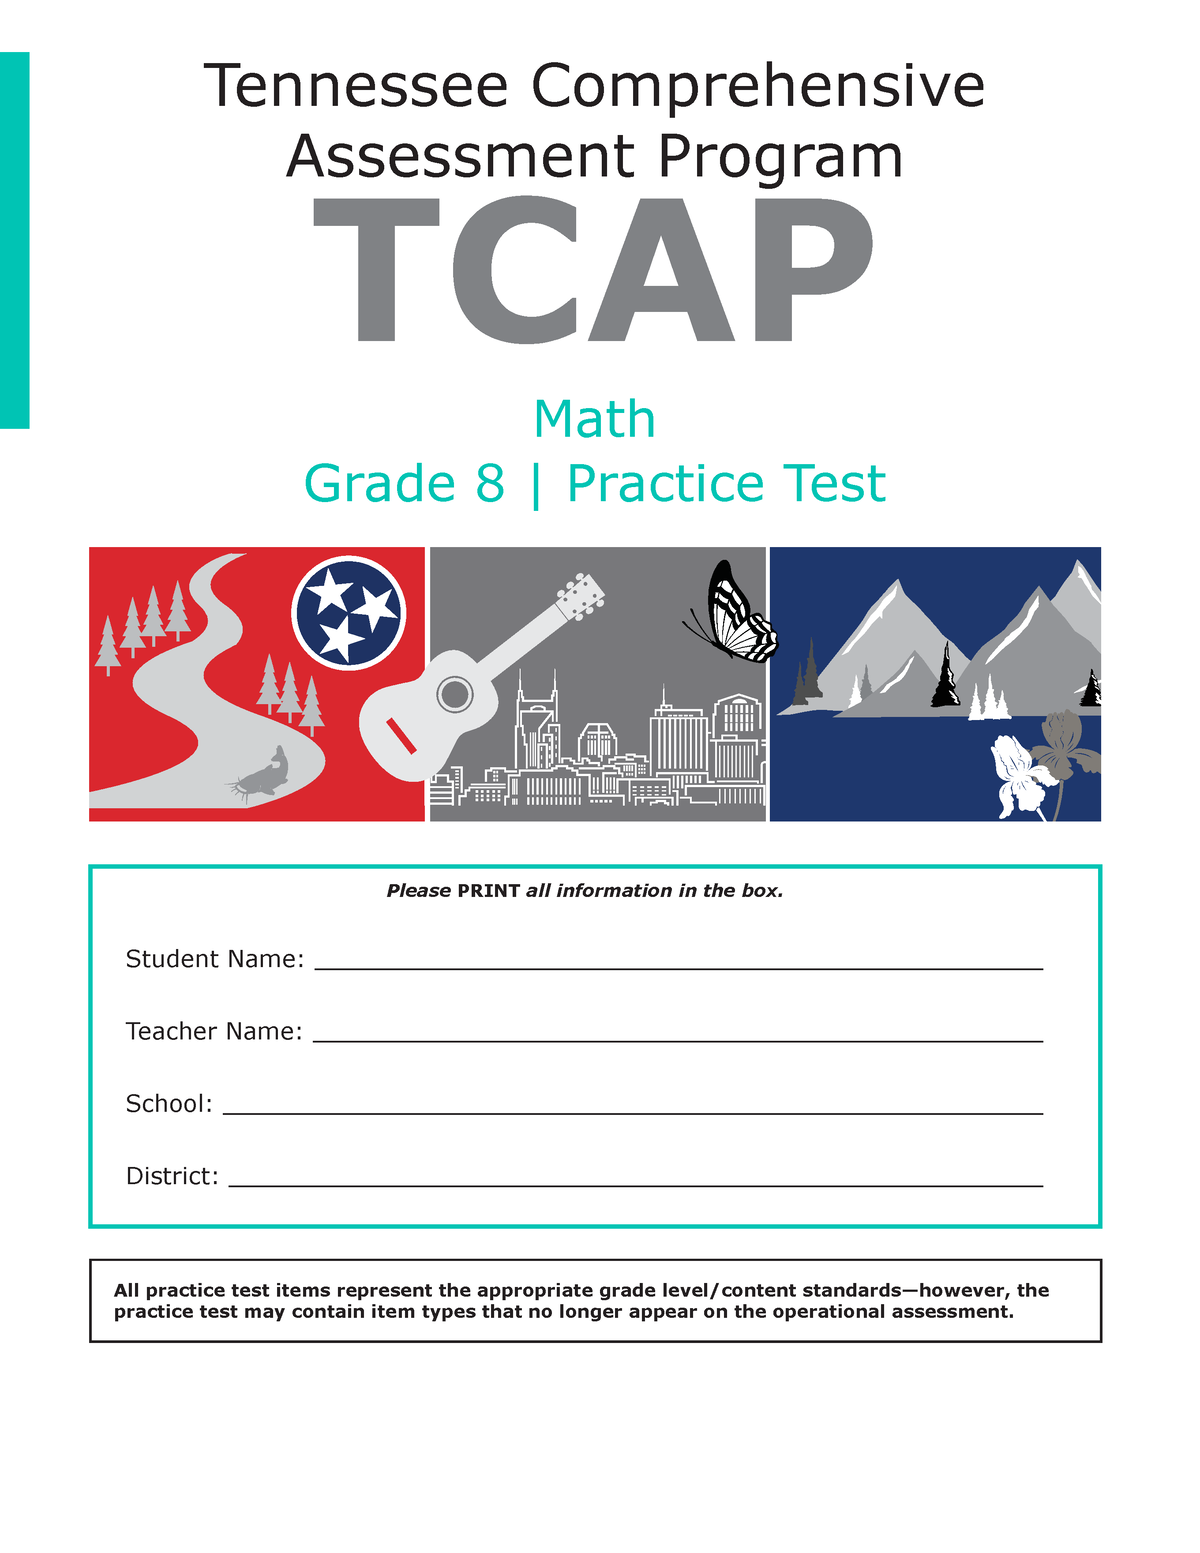 TCAP GR 8 Math 2019 20 Practice Test Math Grade 8 Practice Test